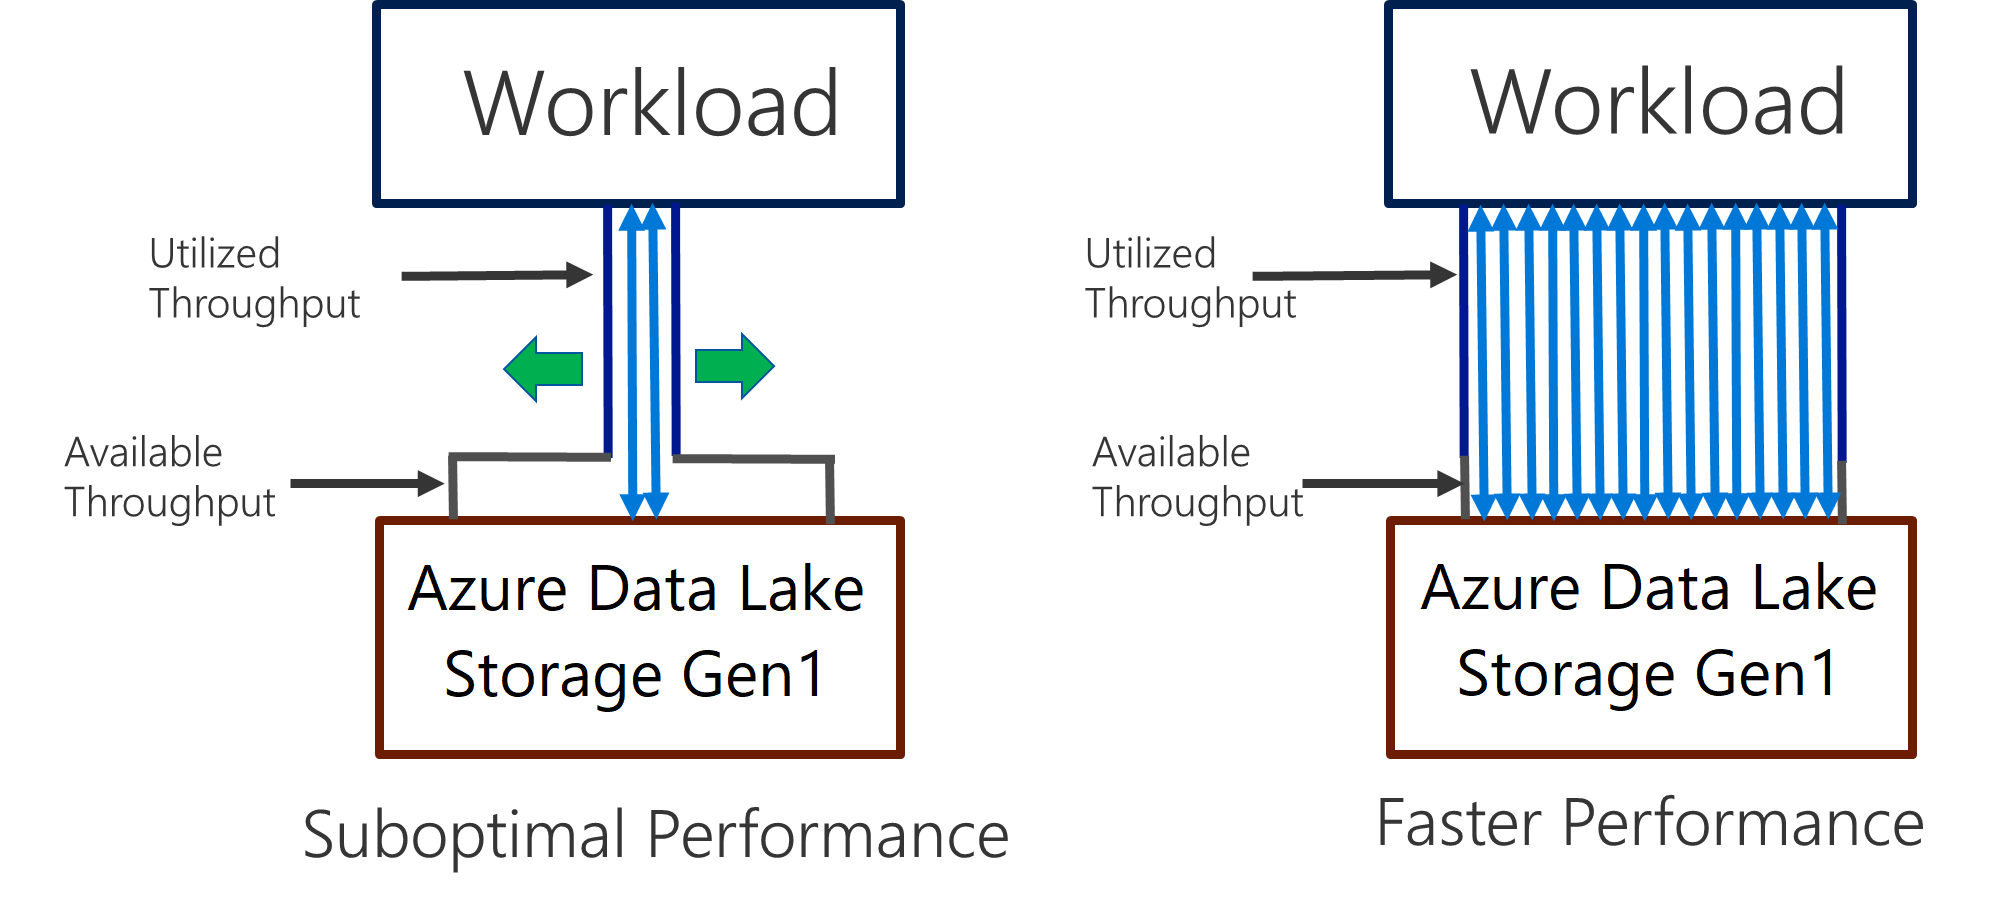 Data Lake Storage Gen1 performance